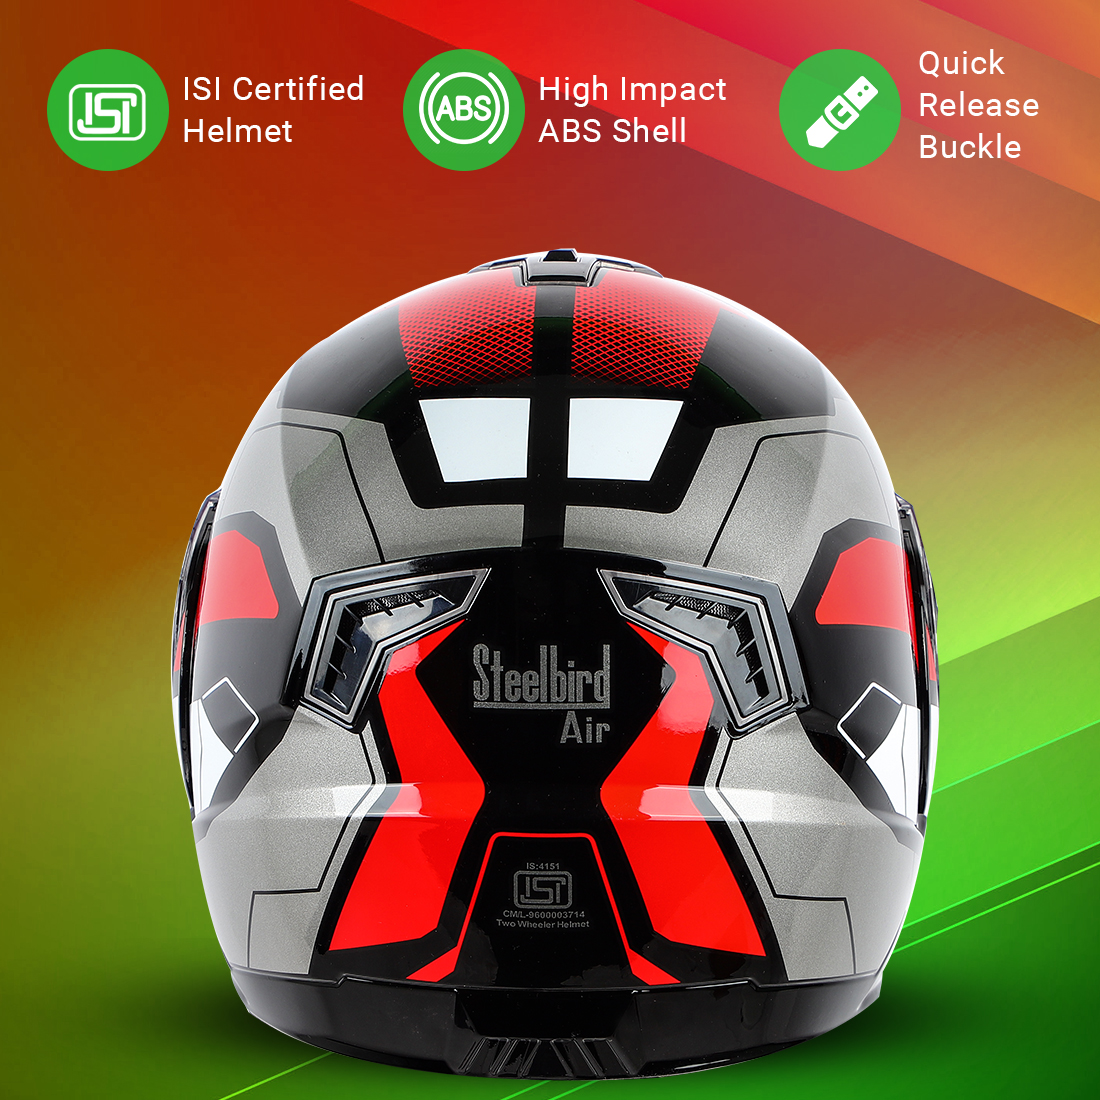 Steelbird SBA-7 Huracan ISI Certified Flip-Up Helmet For Men And Women With Inner Sun Shield (Glossy Black Red)